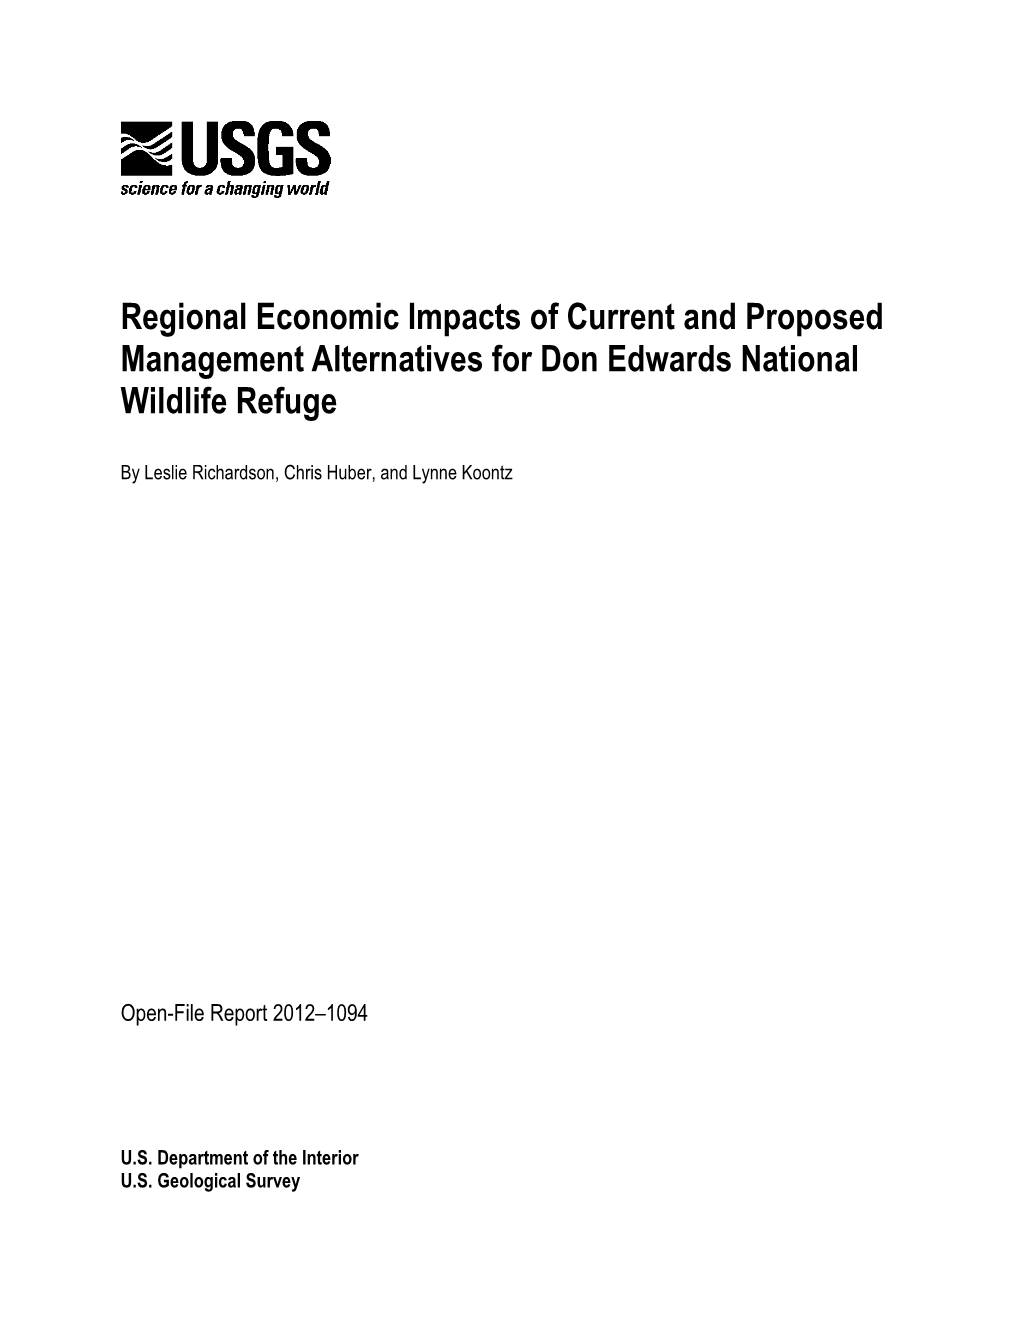 Regional Economic Impacts of Current and Proposed Management Alternatives for Don Edwards National Wildlife Refuge